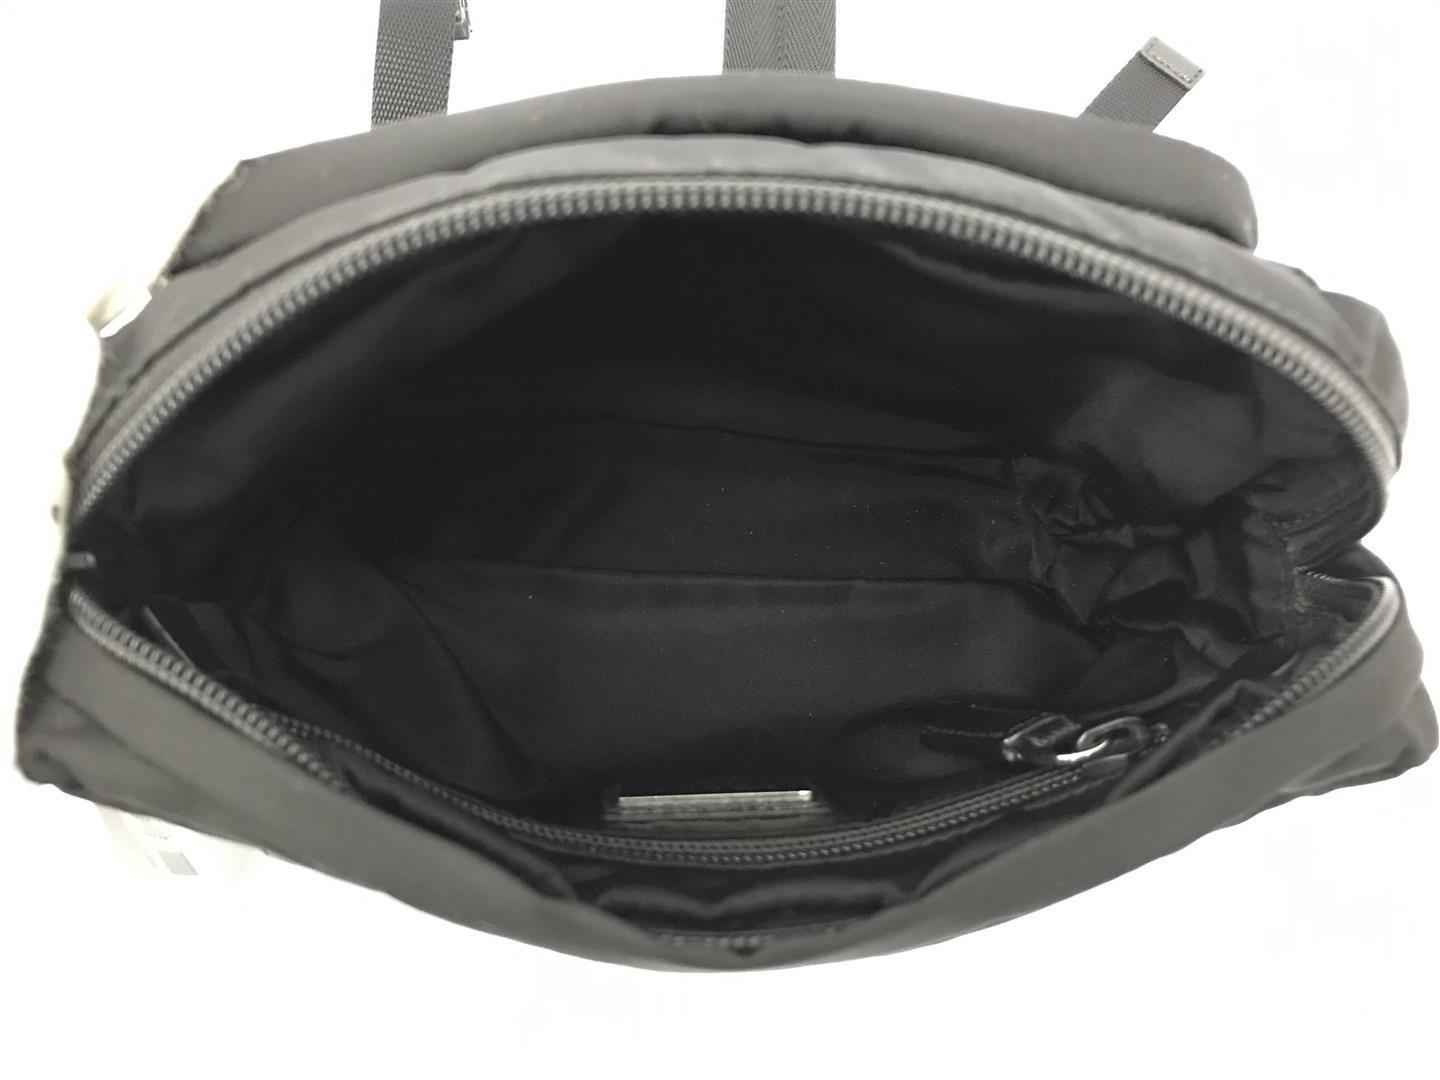 Prada Black Nylon Crossbody Shoulder Bag